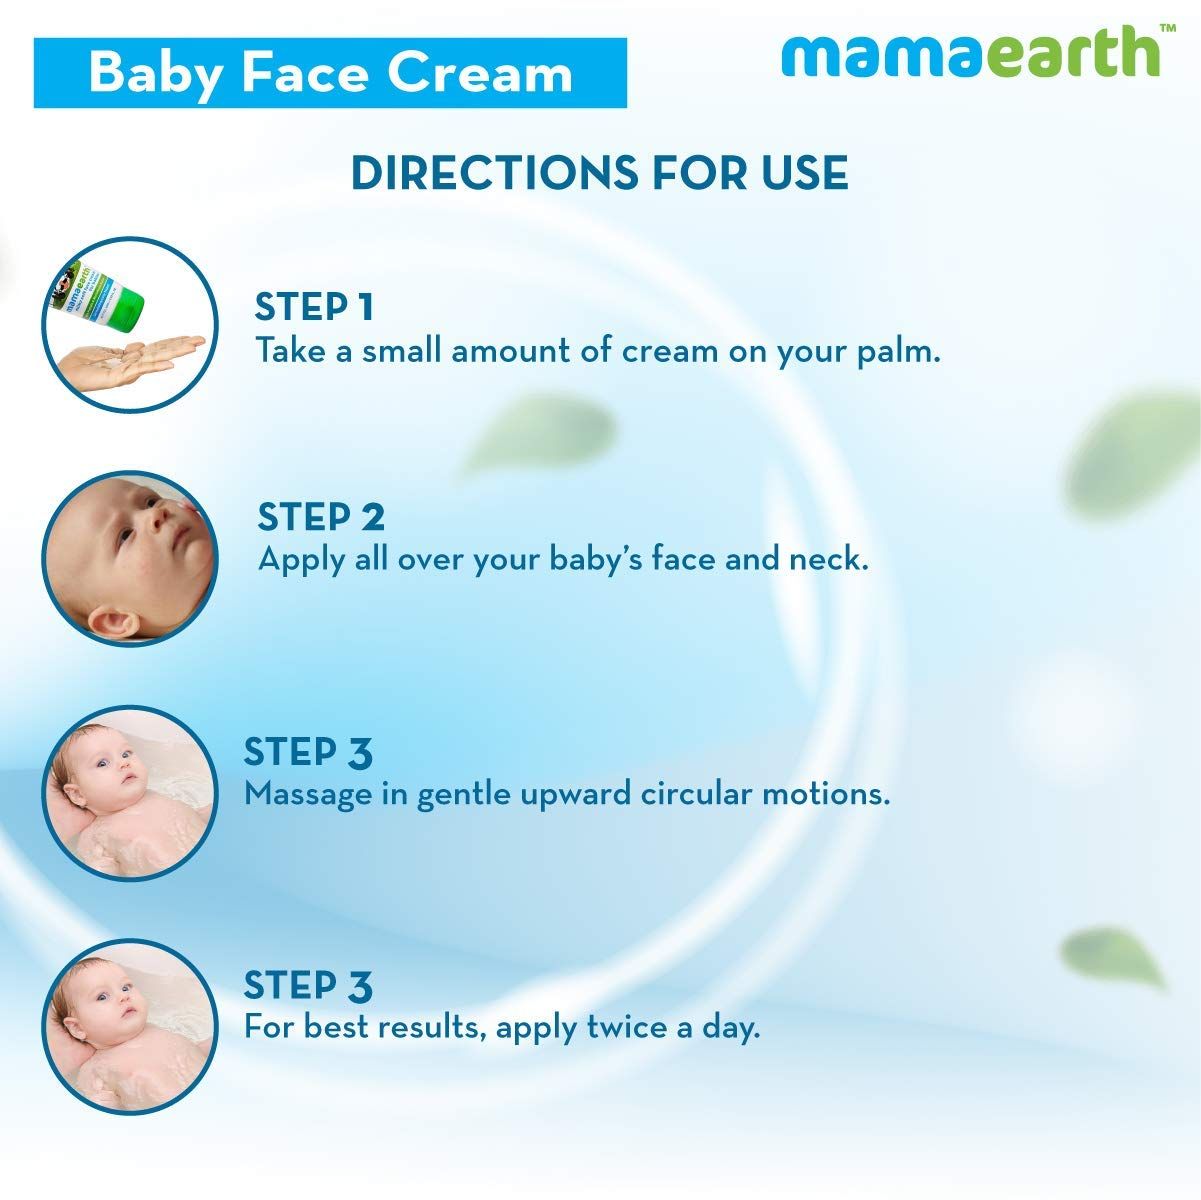 Milky Soft Face Cream With Murumuru Butter for Babies, 60 ml